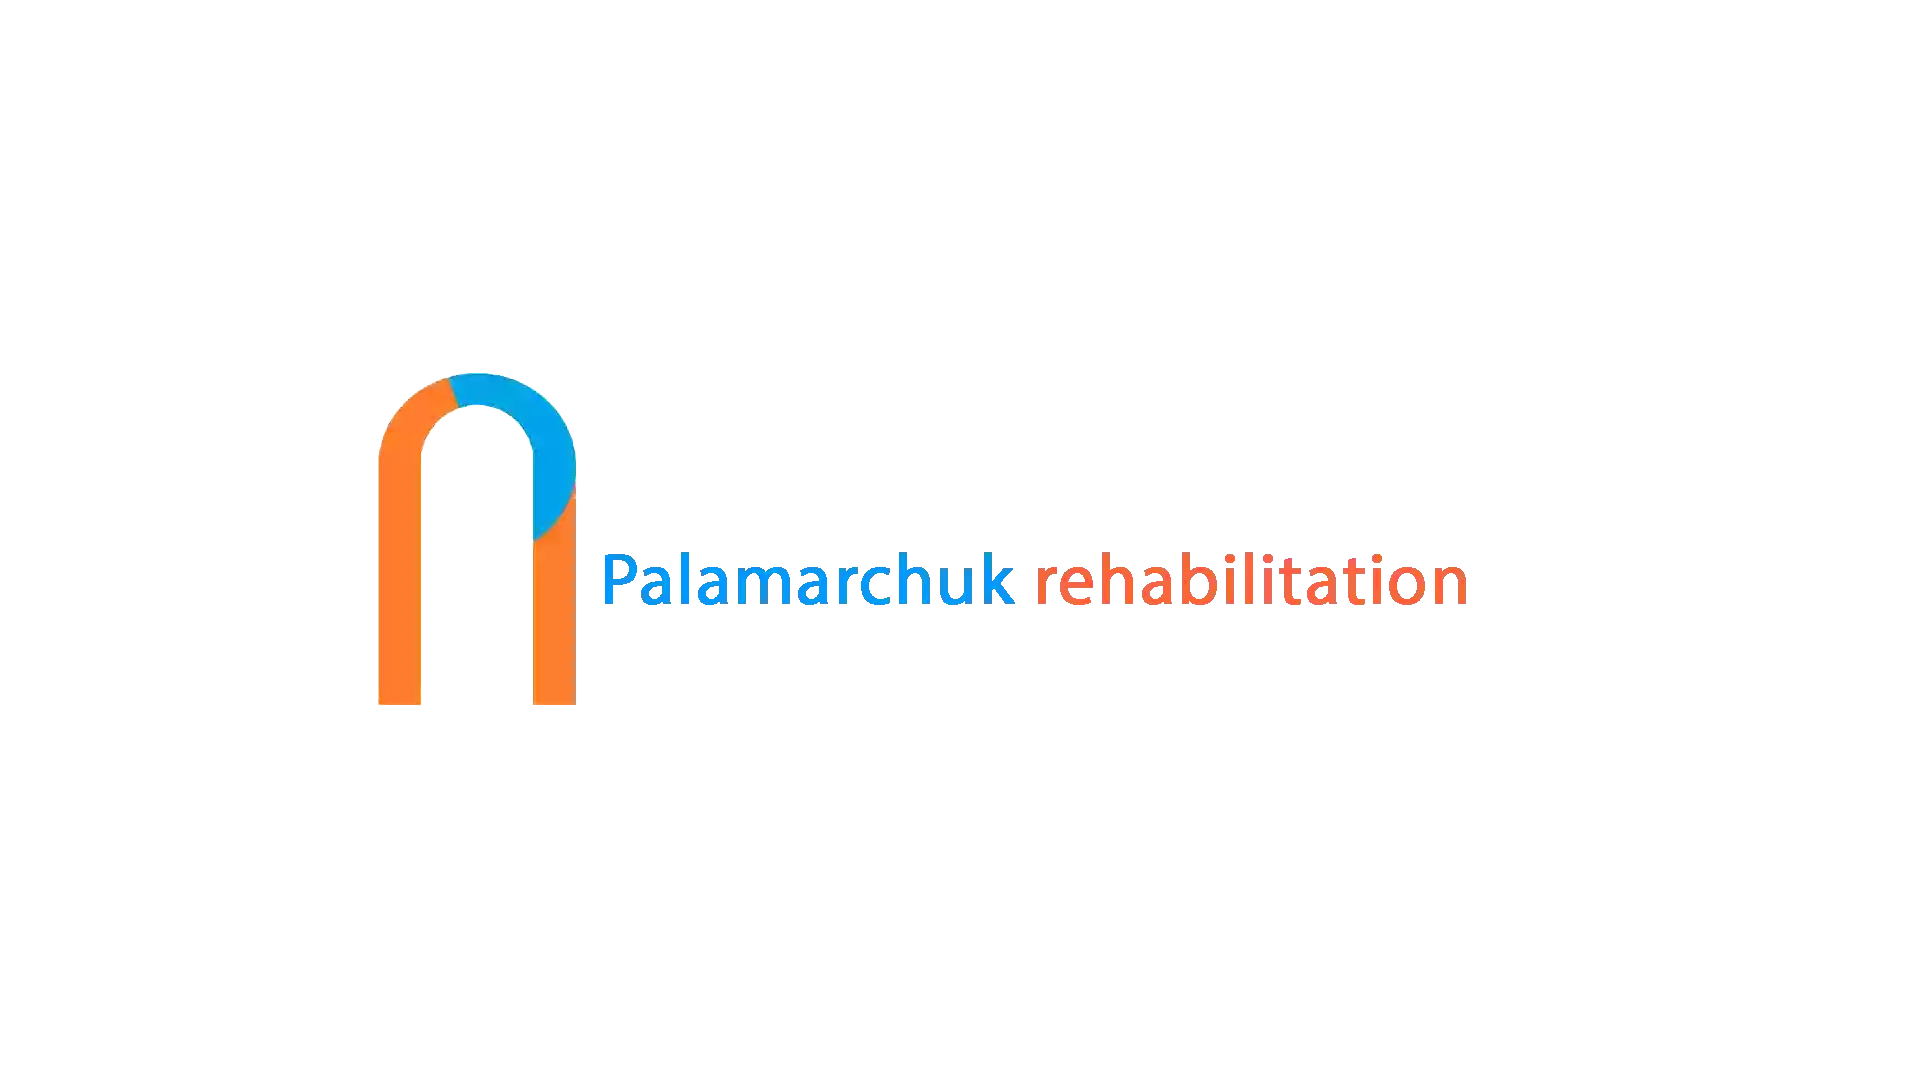 Palamarchuk rehabilitation